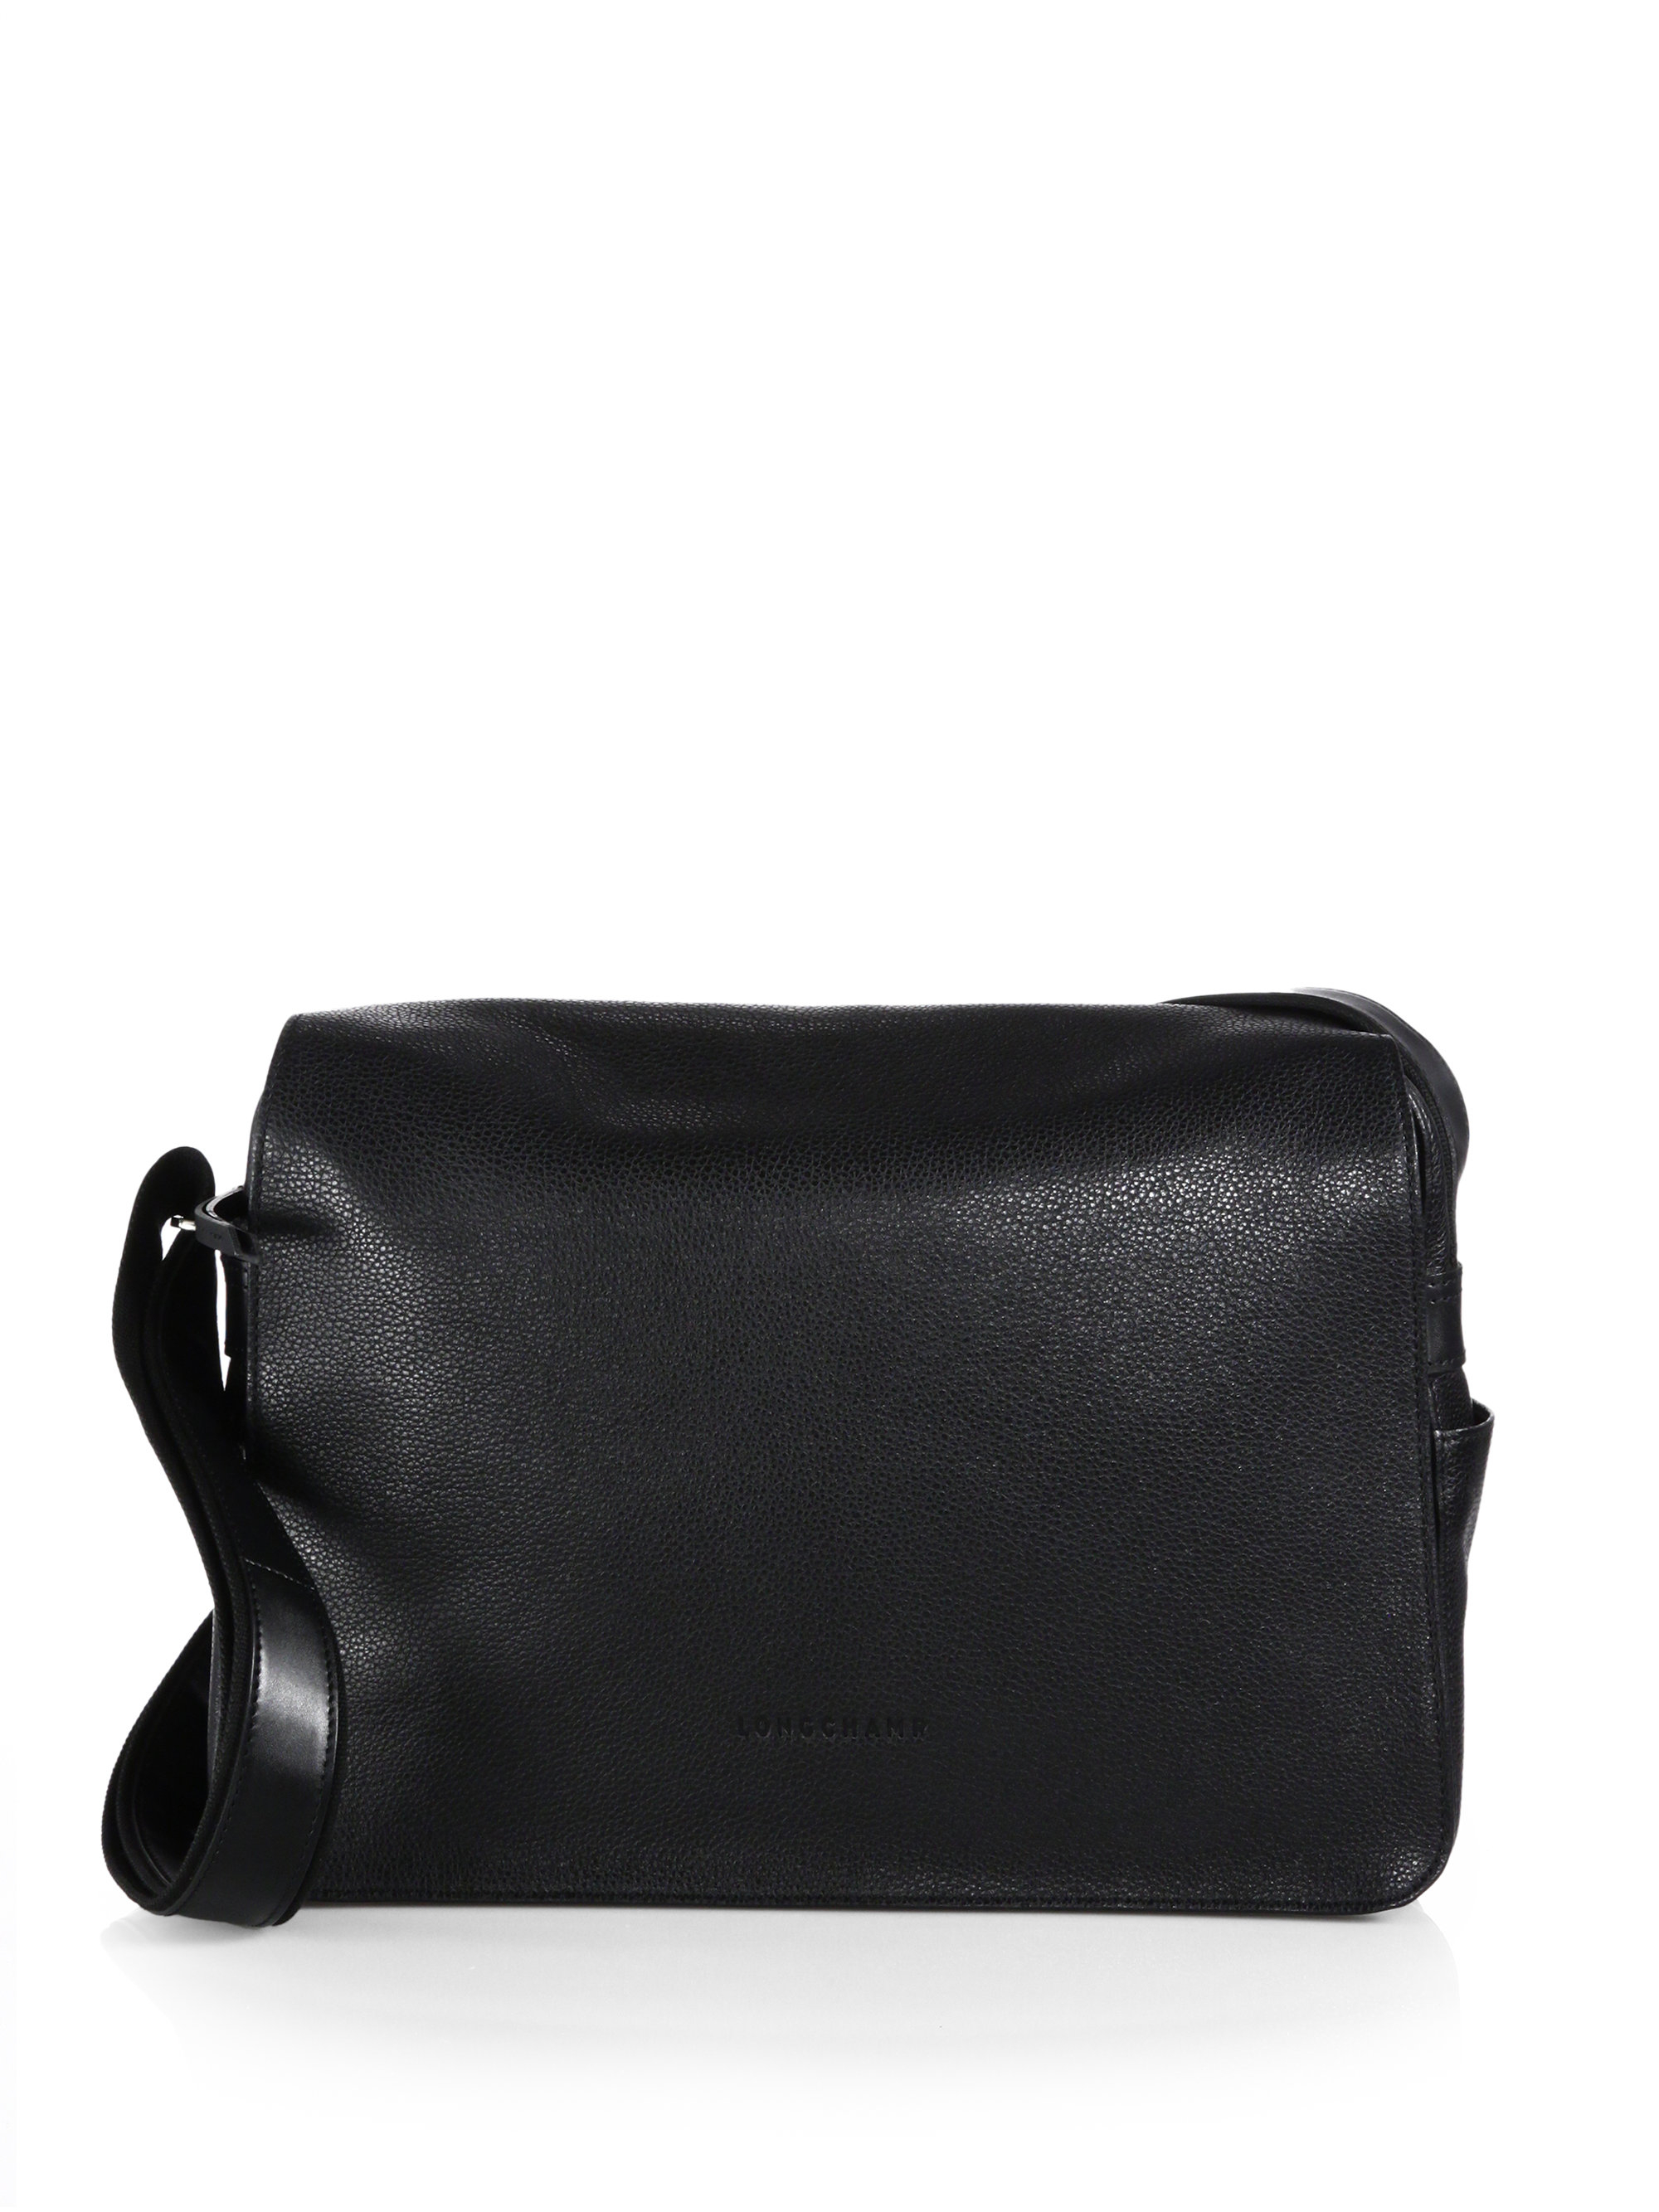 longchamp leather messenger bag